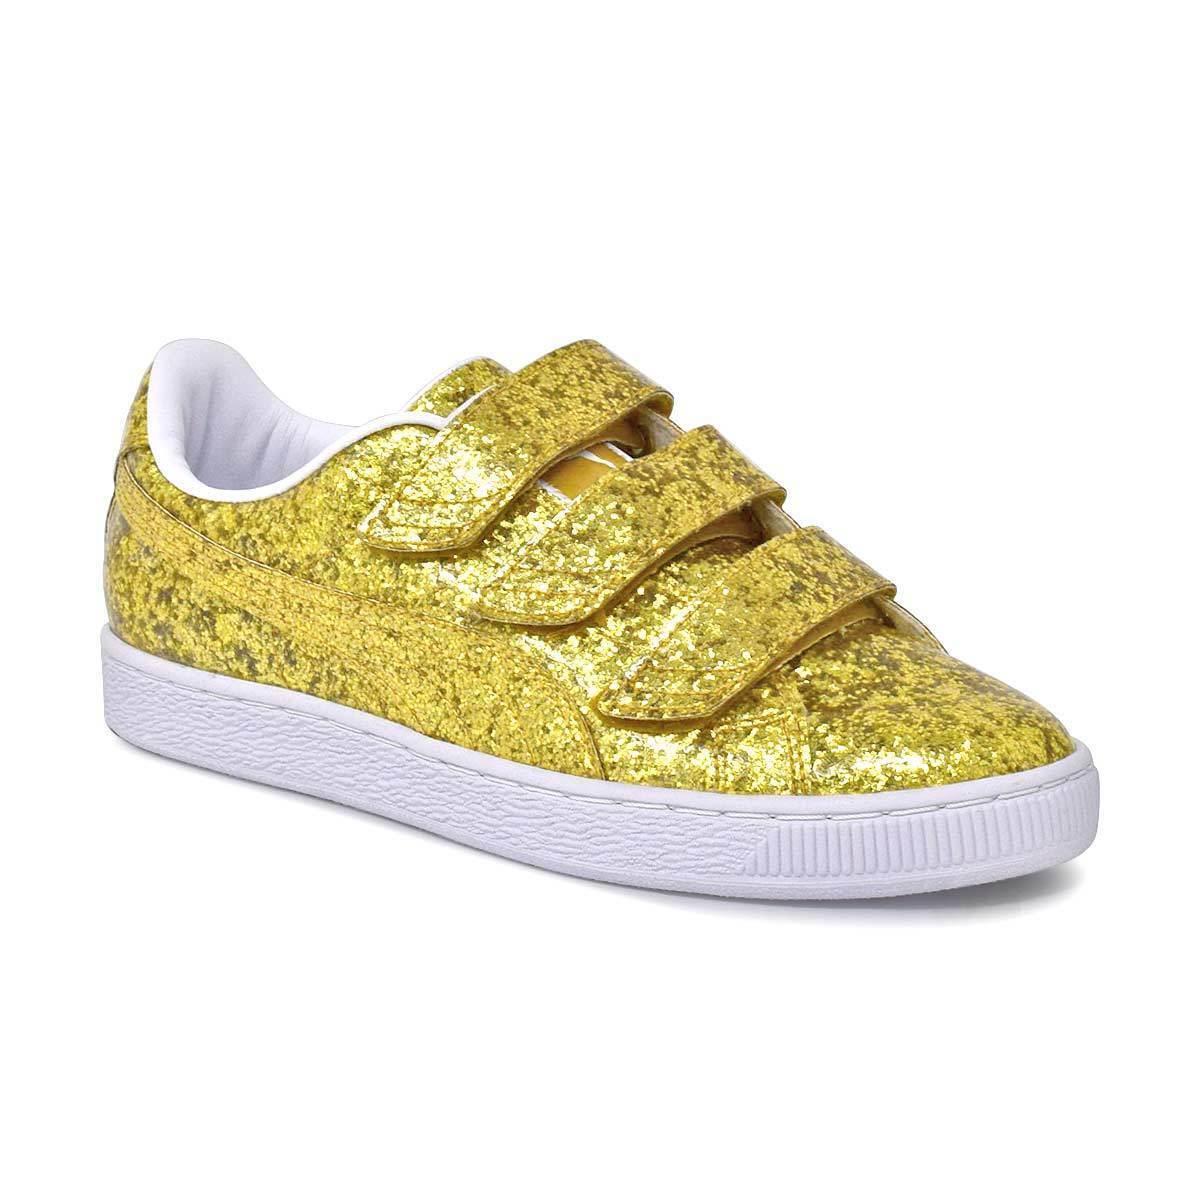 Puma Basket Strap Glitter 364070 02 Women`s Gold Low Top Sneakers Shoes C2099 5